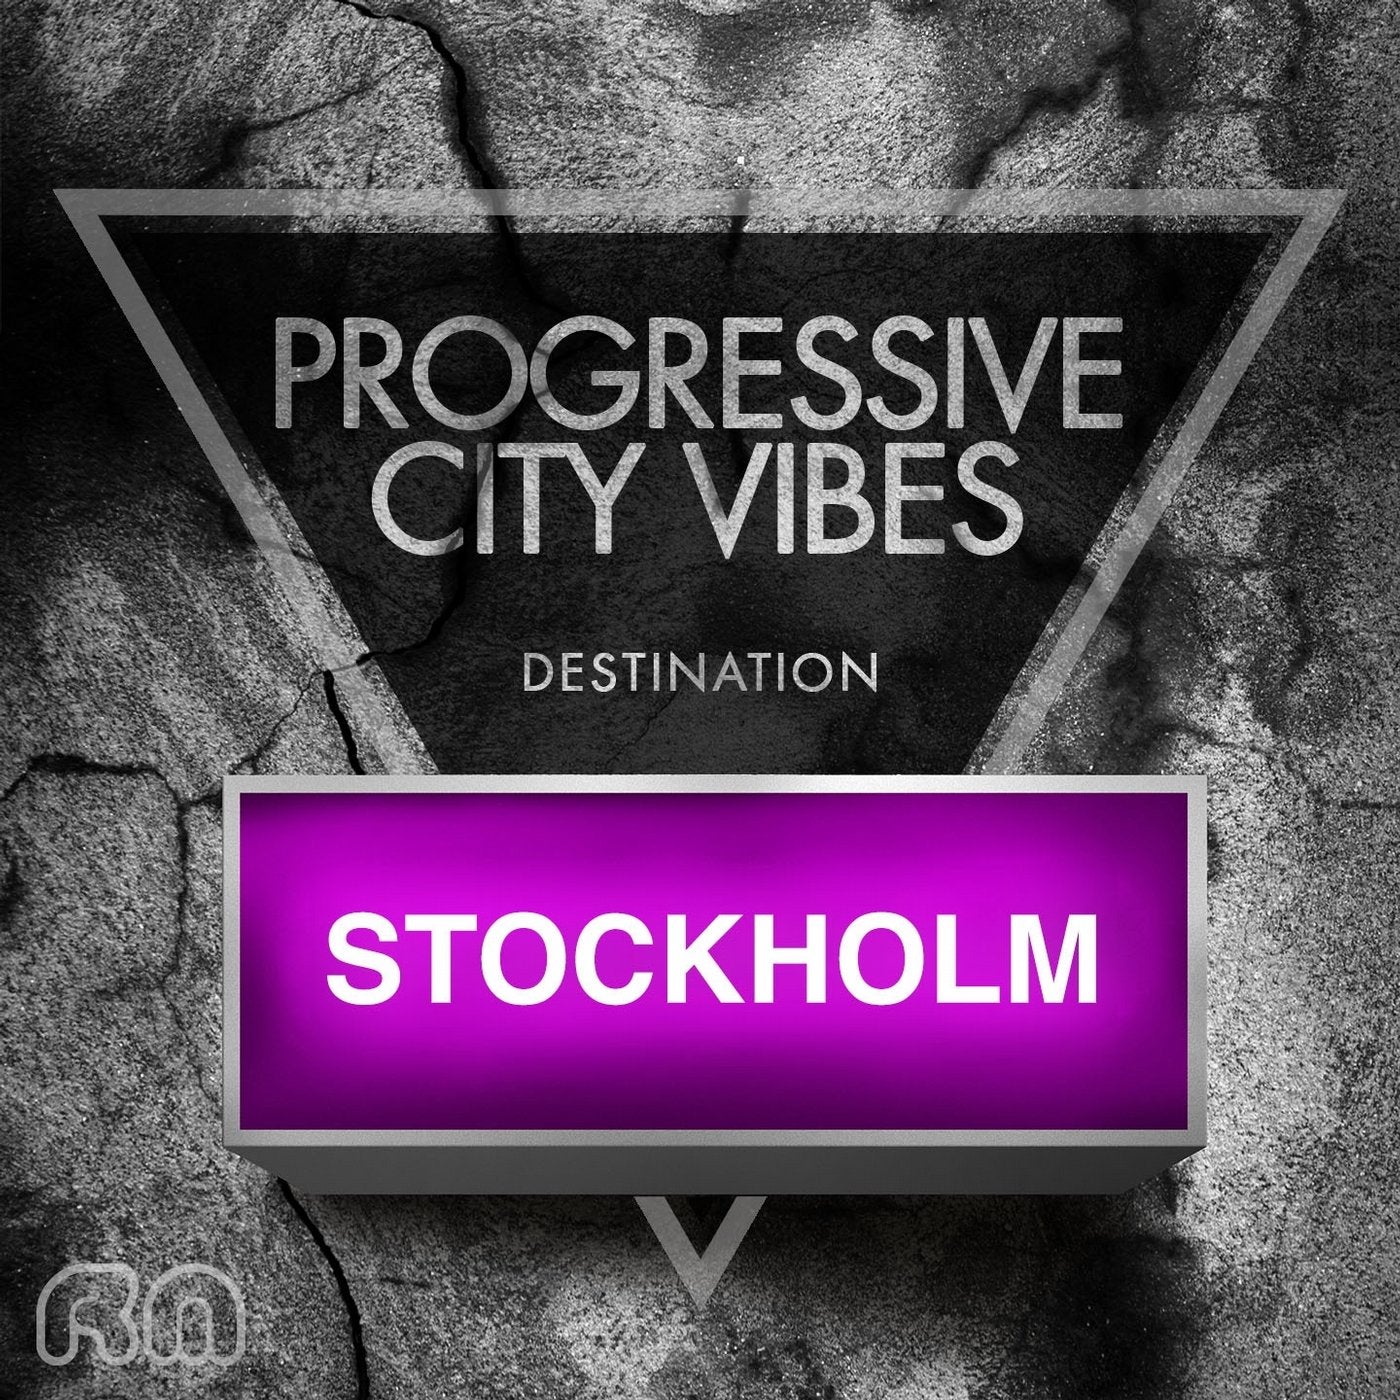 Progressive City Vibes - Destination Stockholm